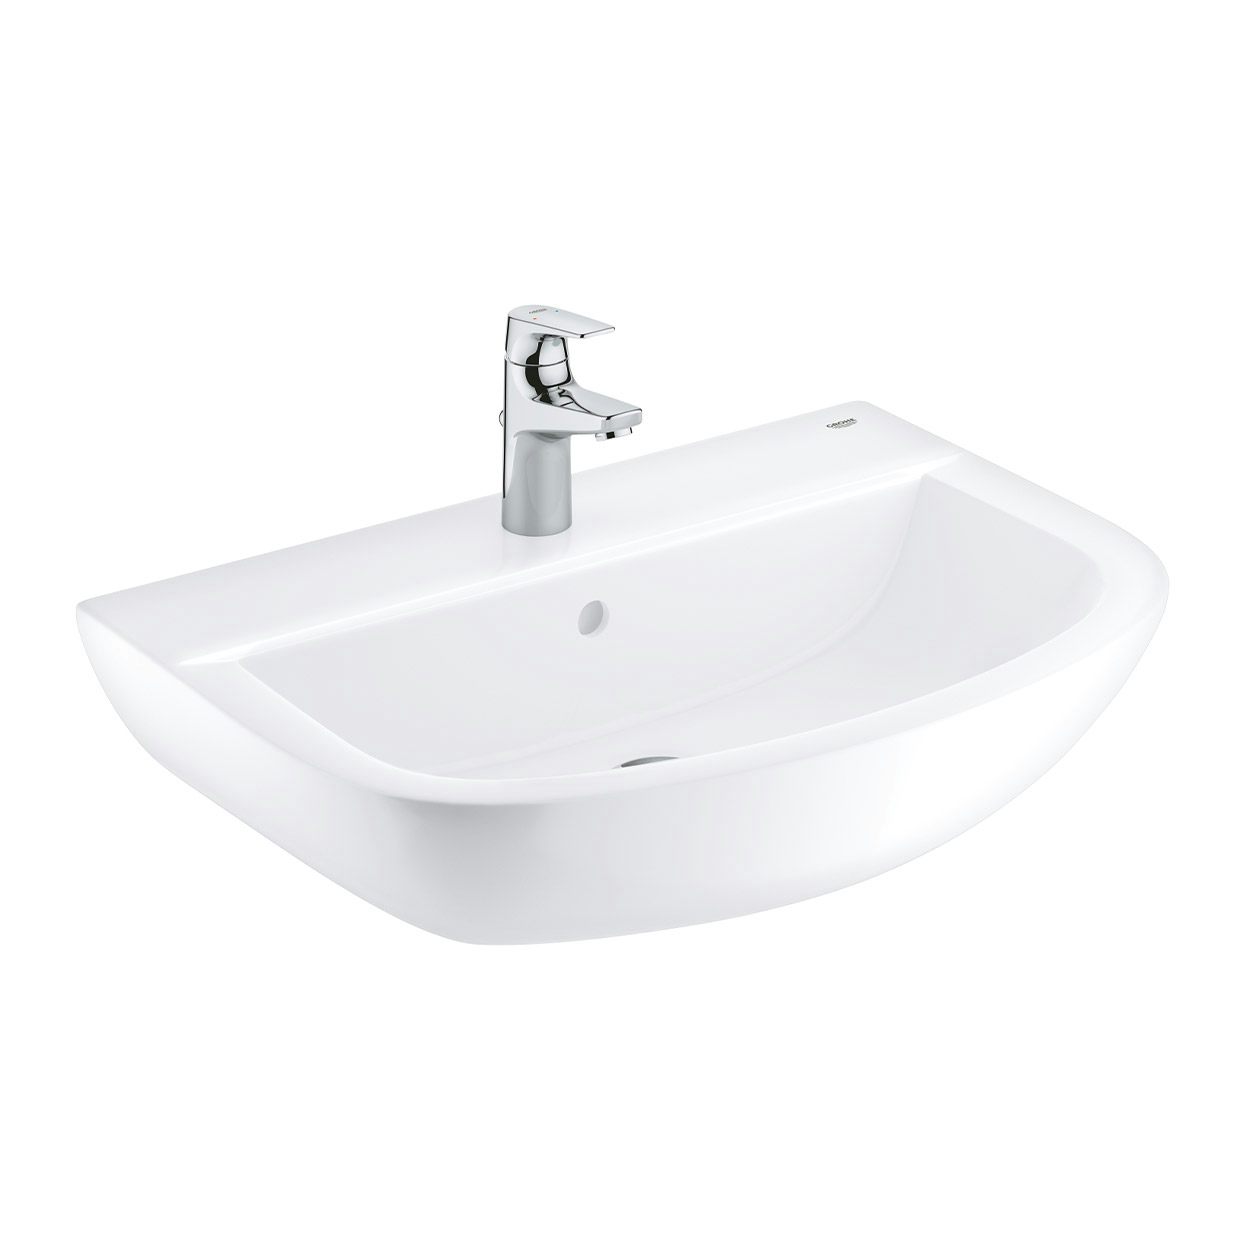 Grohe Bau Ceramic washbasin 60mm with small BauFlow basin mixer tap